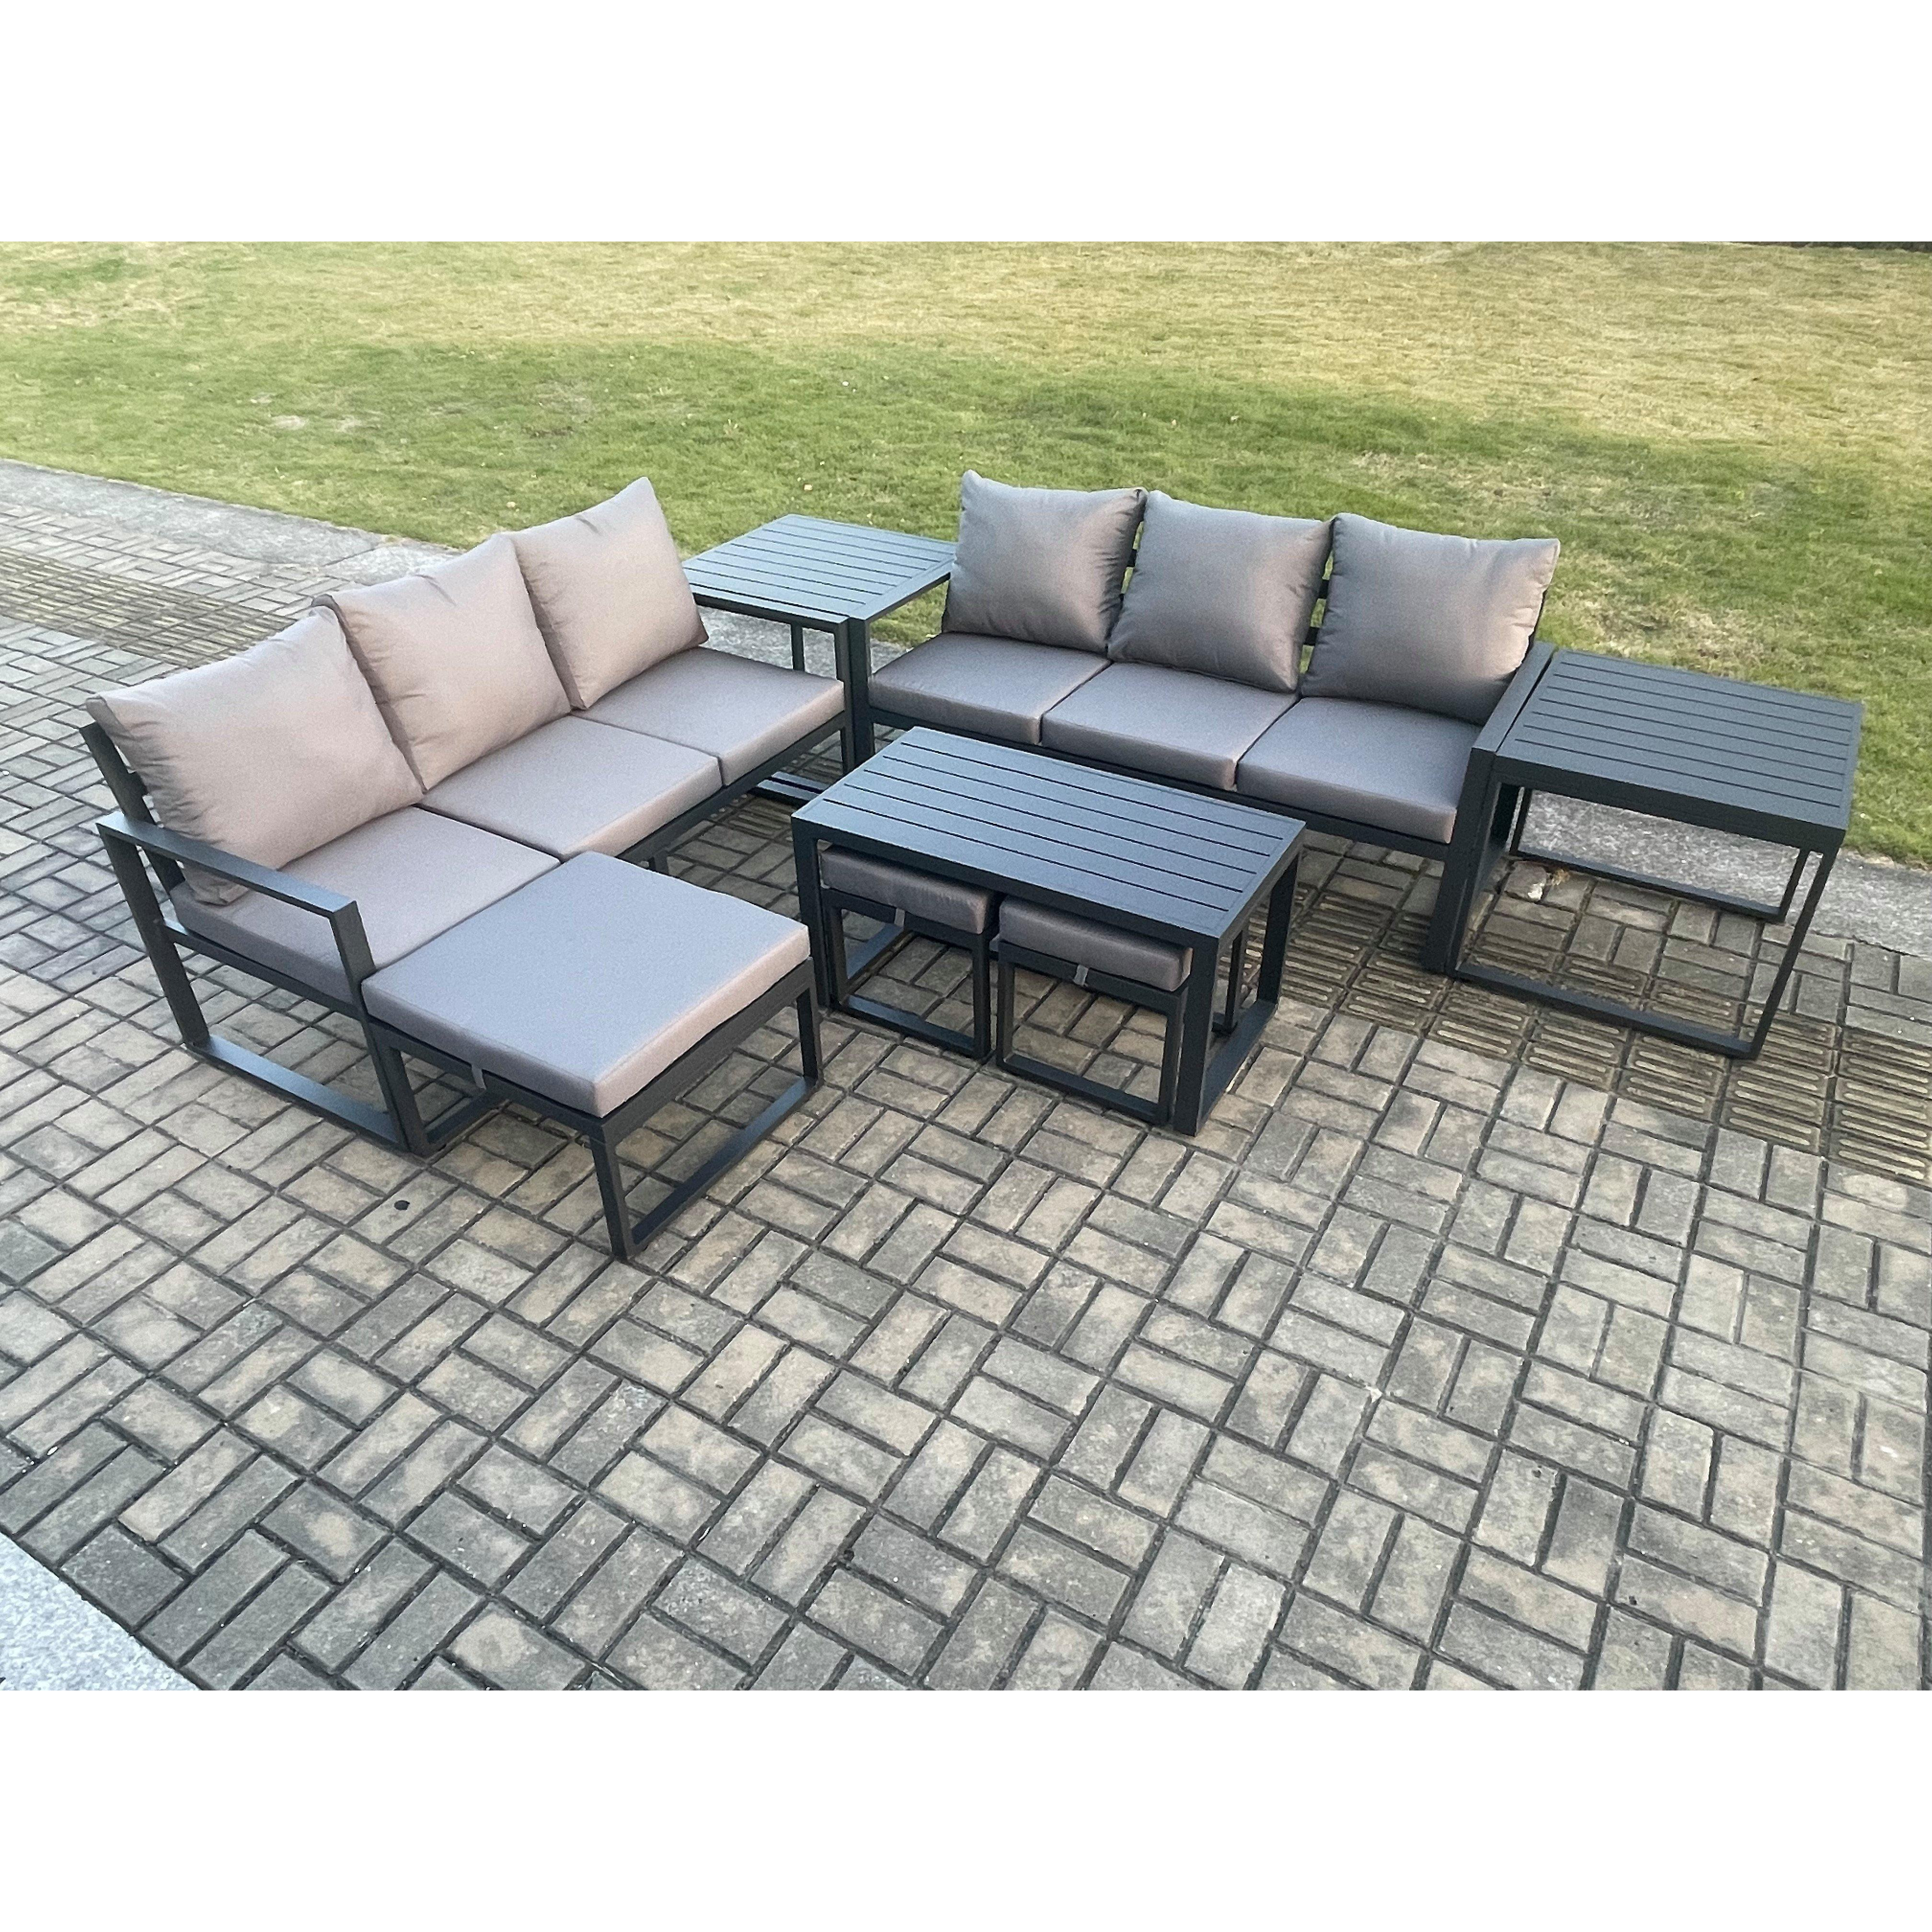 Aluminium 9 Seater Garden Furniture Outdoor Patio Sofa Set with Rectangular Coffee Table 3 Footstools 2 Side Tables Dark Grey - image 1